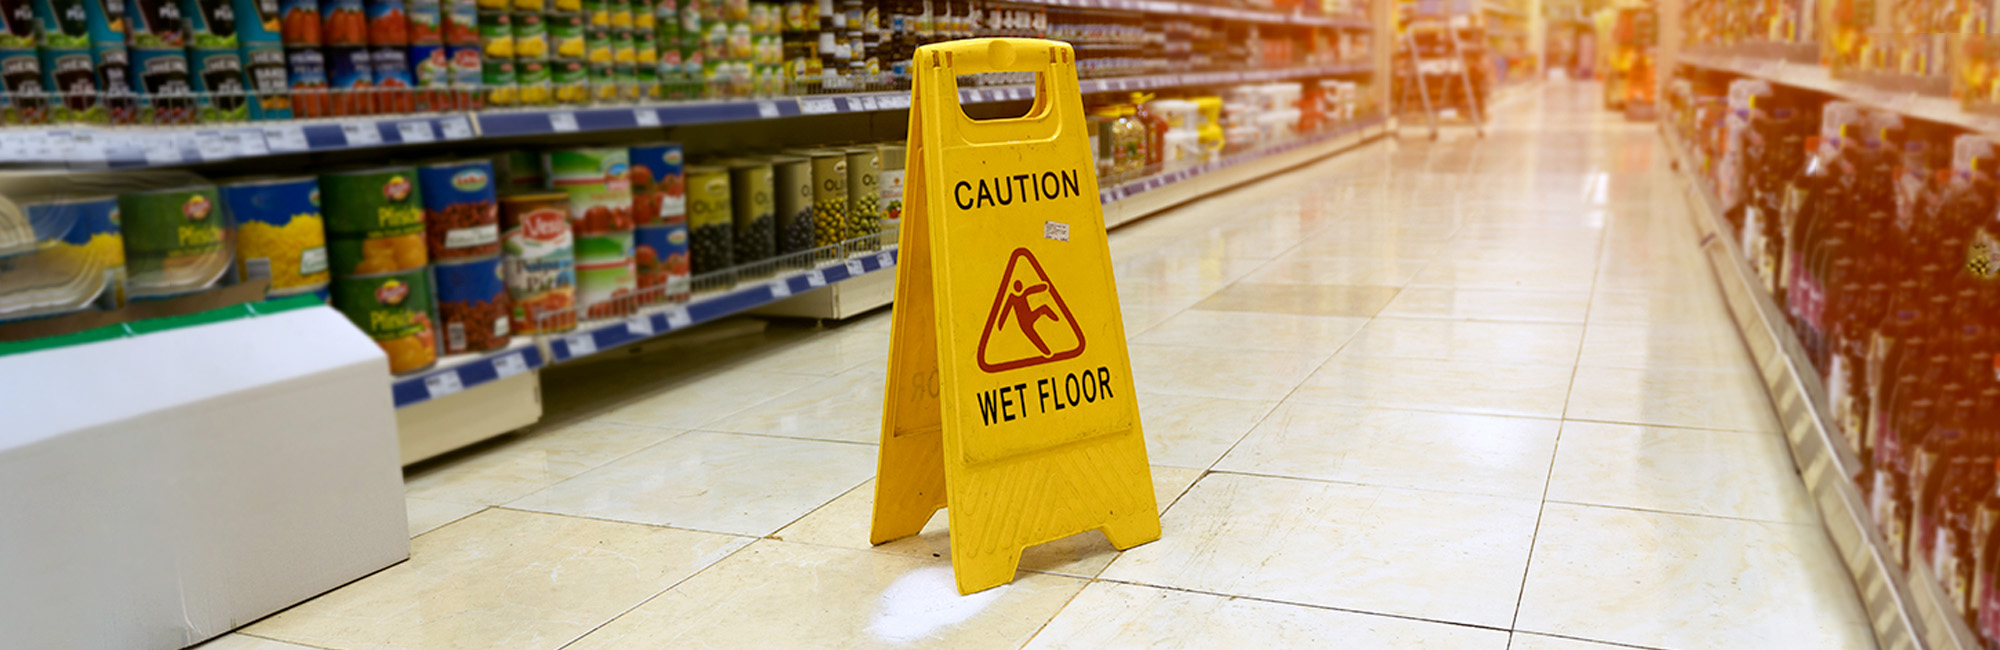 slippery floor sign grocery store